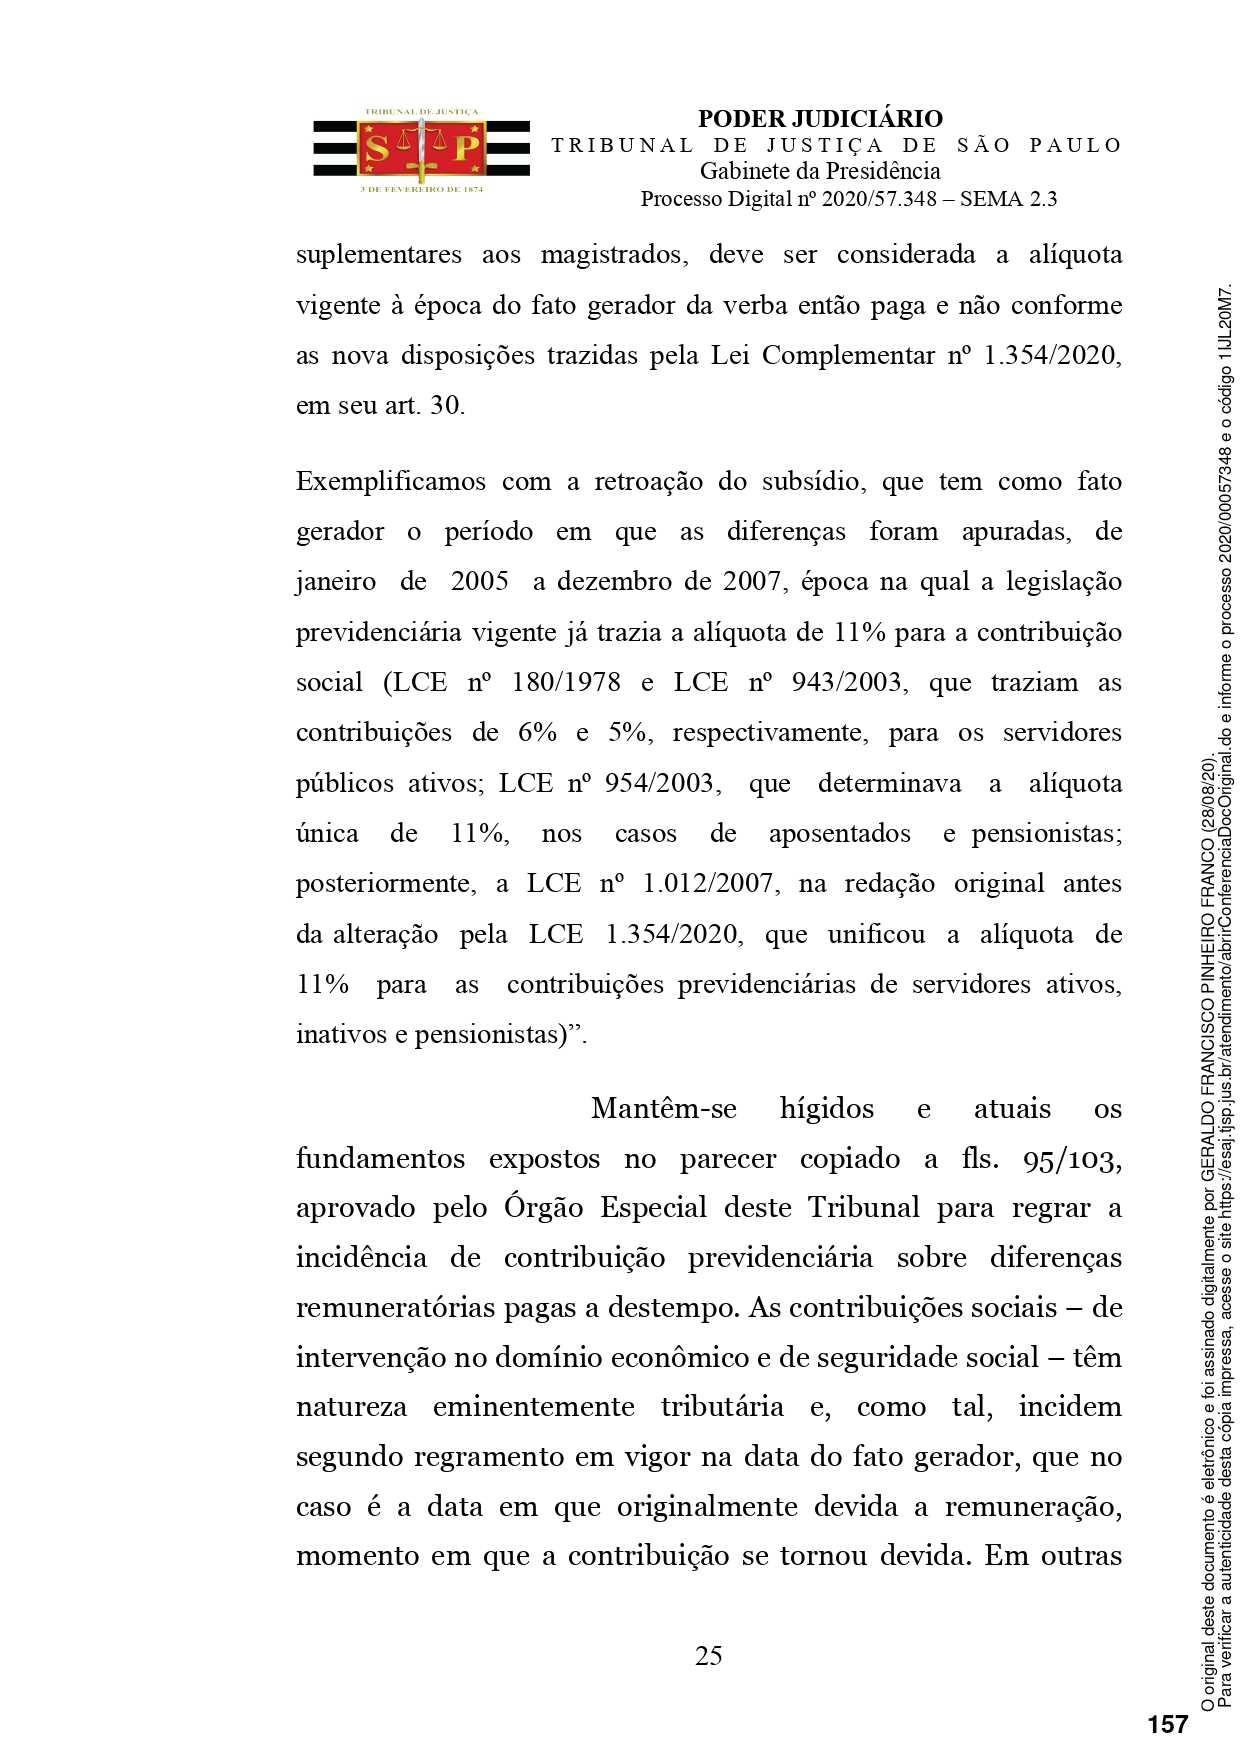 reforma-previdencia-tj-sp_page-0025.jpg